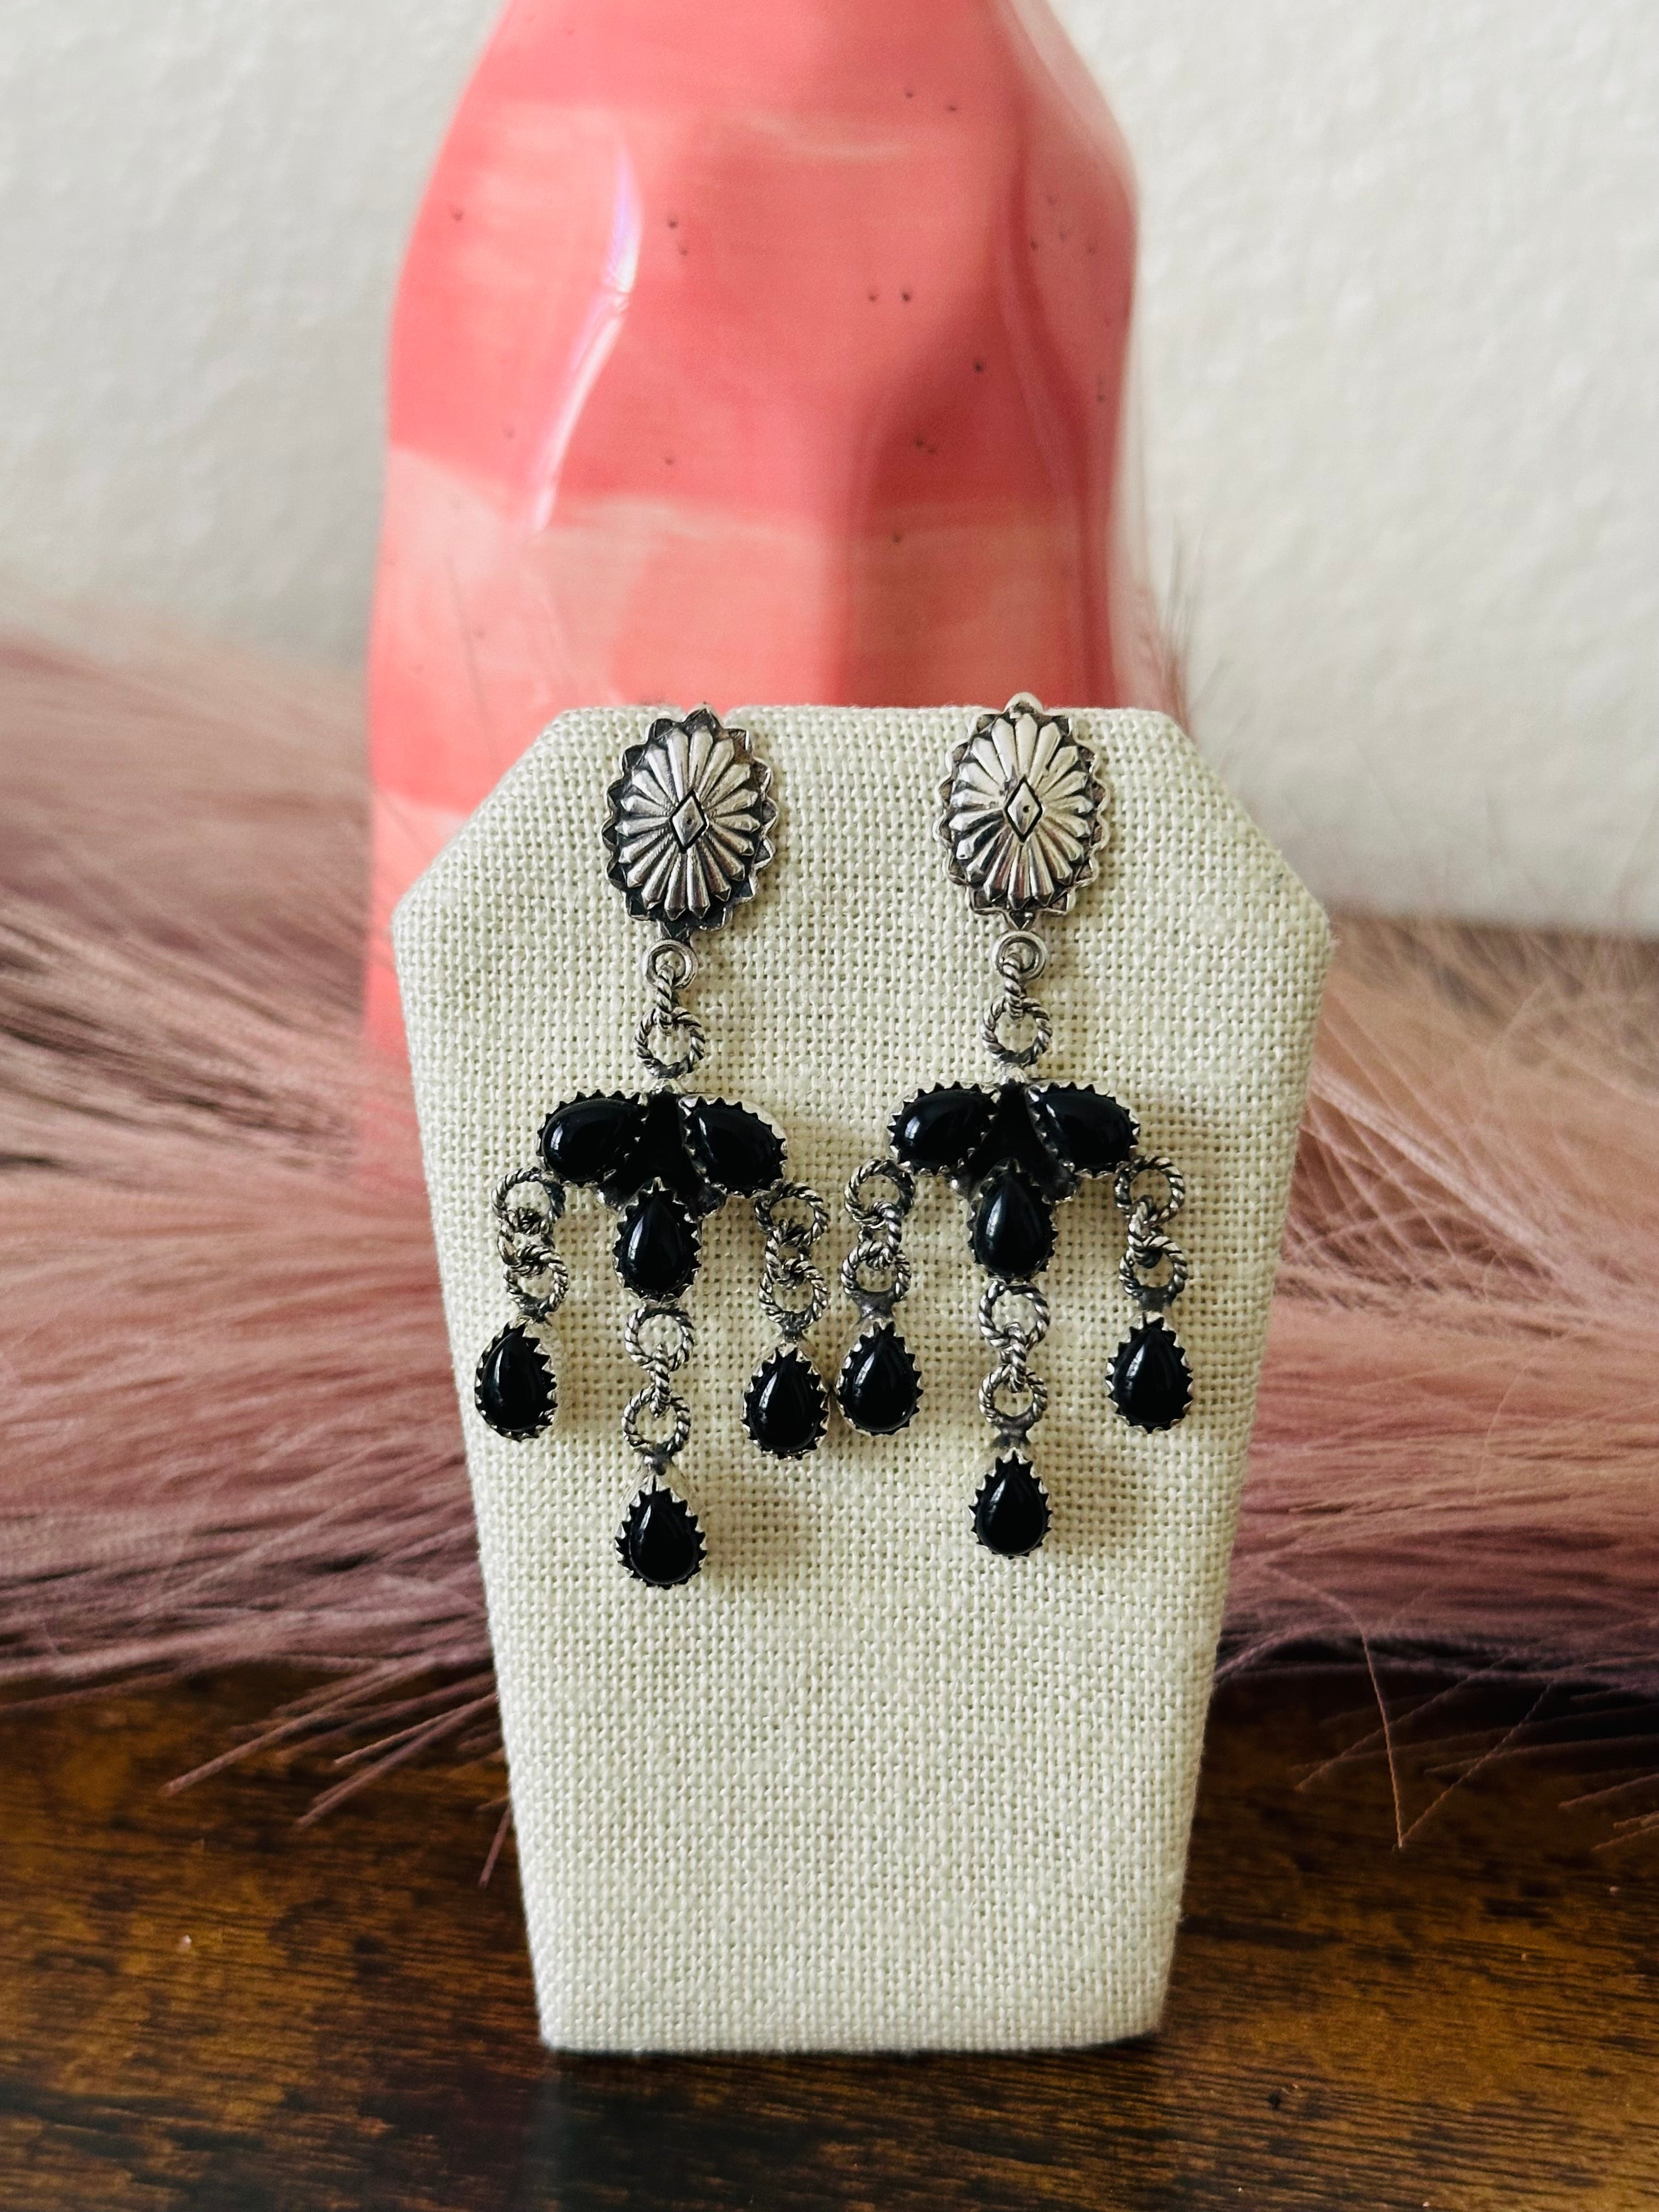 Southwest Handmade Onyx & Sterling Silver Post Dangle Earrings